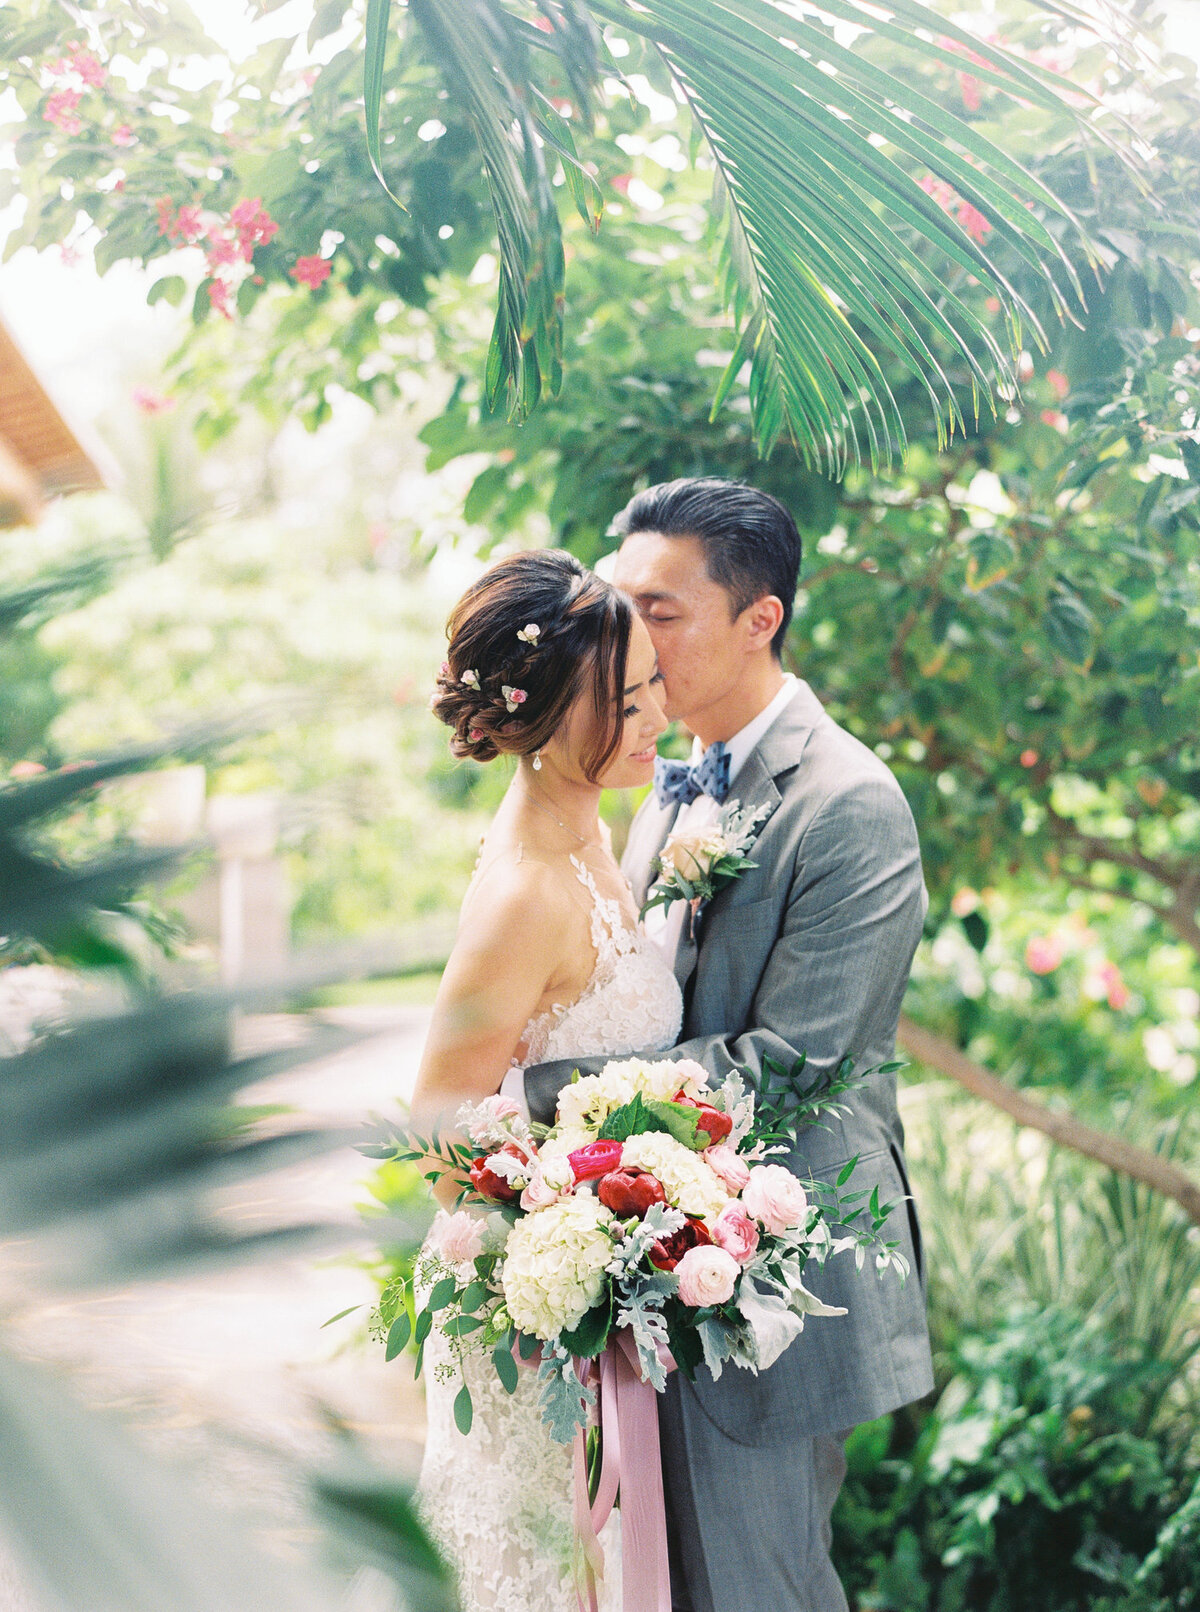 Mei + David | Hawaii Wedding & Lifestyle Photography | Ashley Goodwin Photography